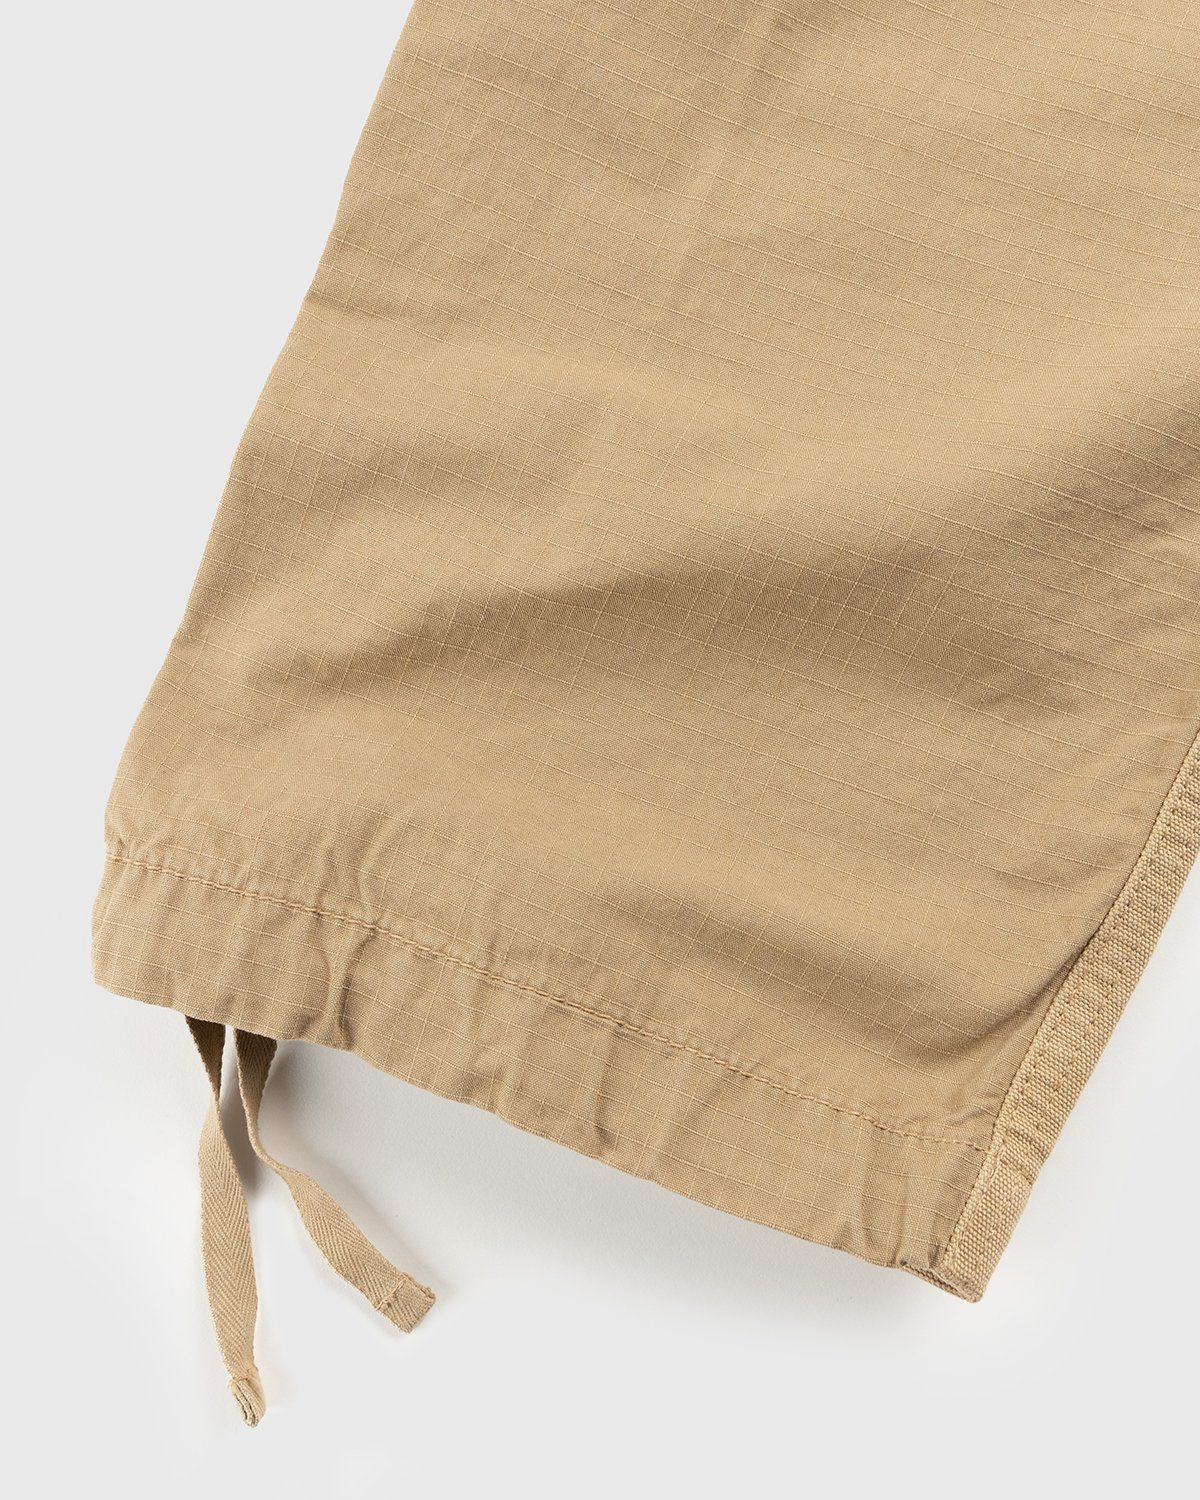 Carhartt WIP – Medley Pant Dusty Hamilton Brown Garment Dyed - Work Pants - Brown - Image 5